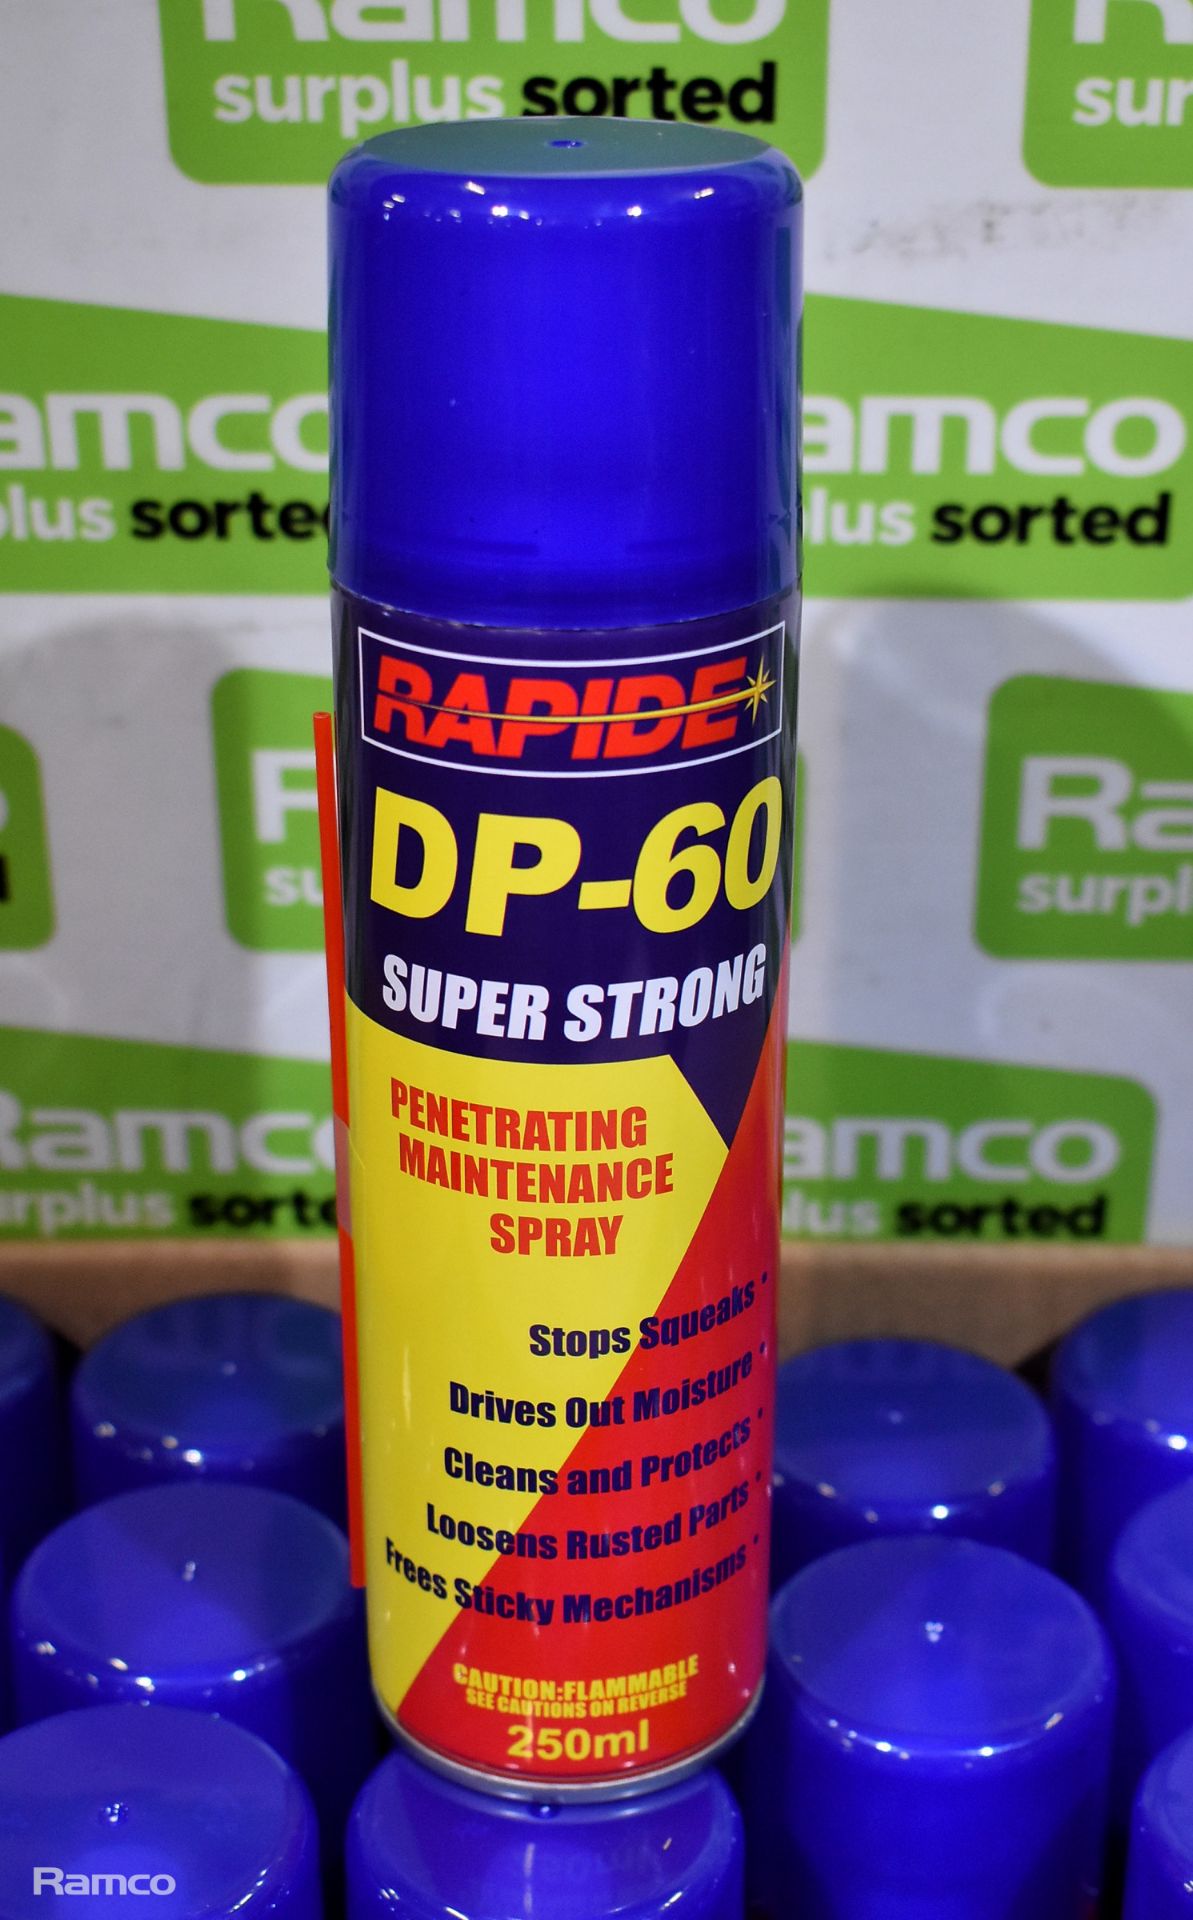 Rapide DP-60 super strong maintenance rapid penetration spray - 250ml spray tins - 24 tins - Image 2 of 2